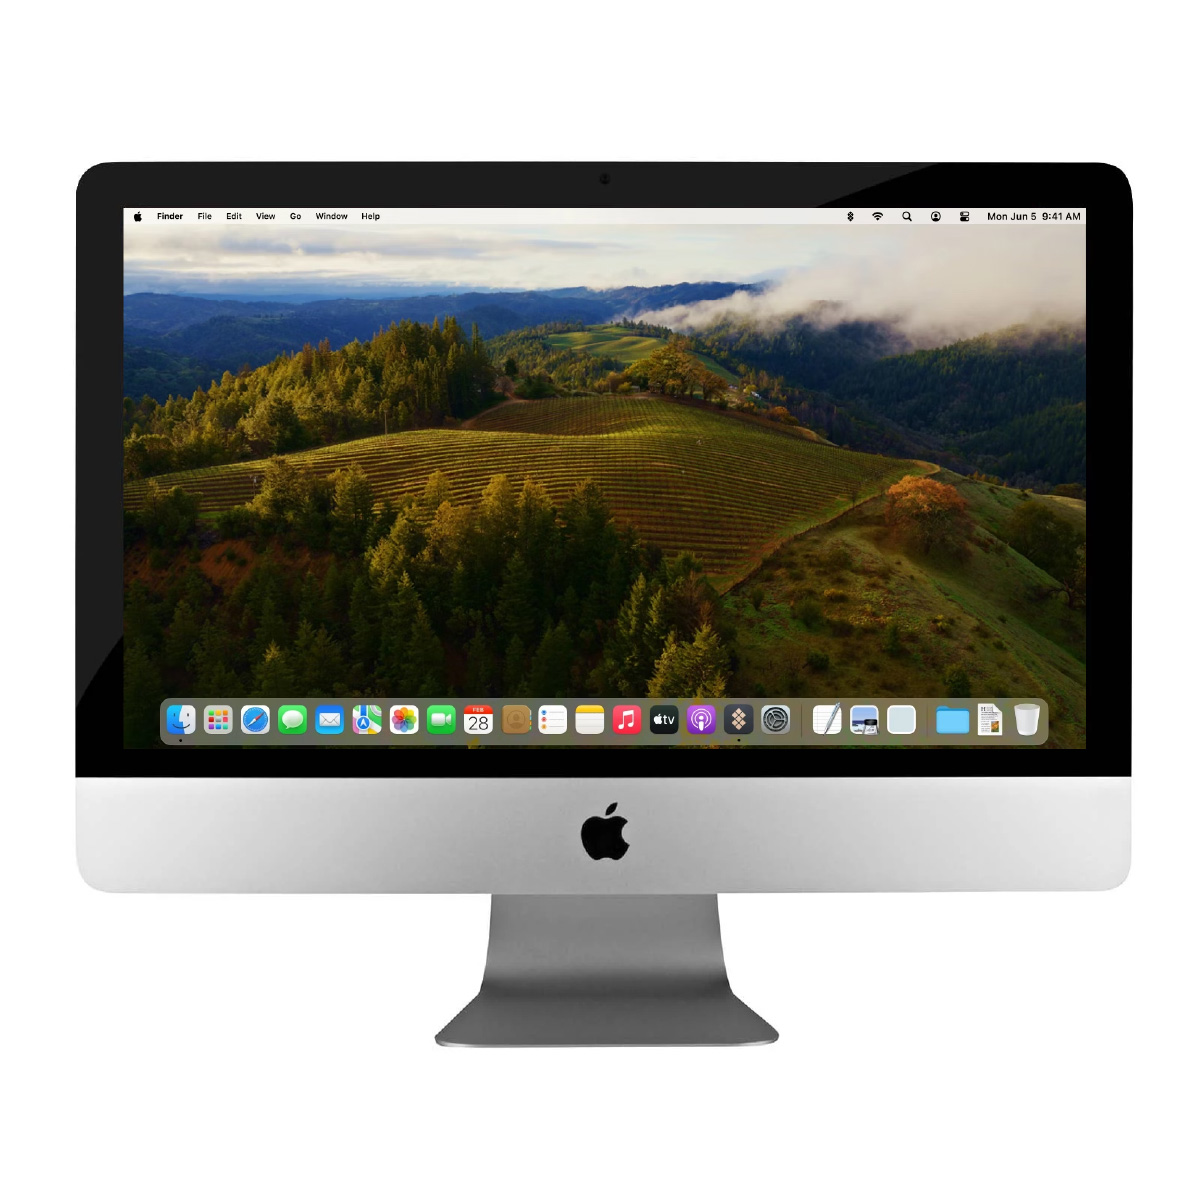 Apple iMac 2013 21.5